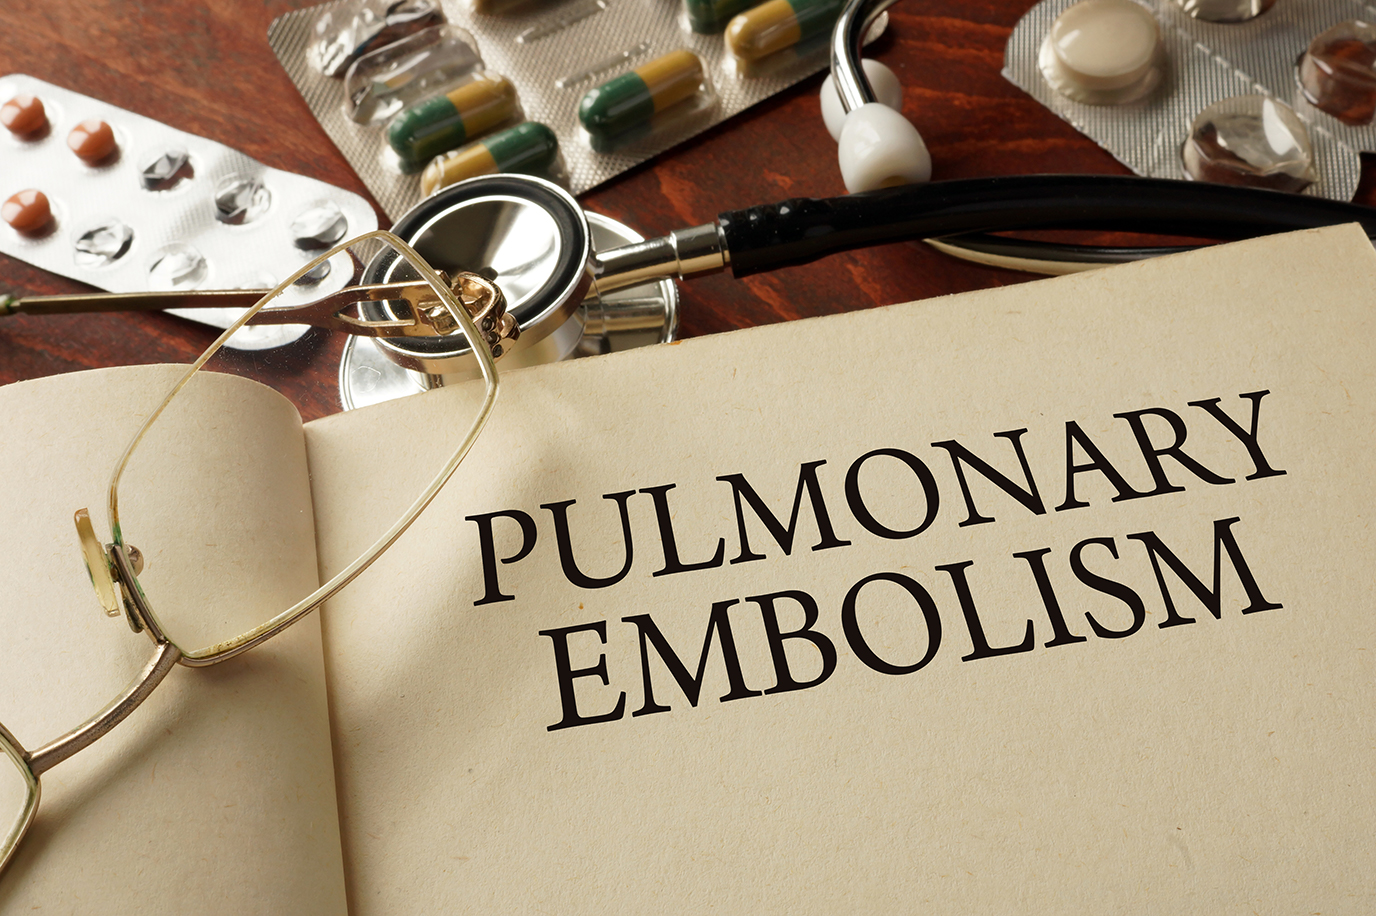 Xeljanz and pulmonary embolism and pulmonary thrombosis